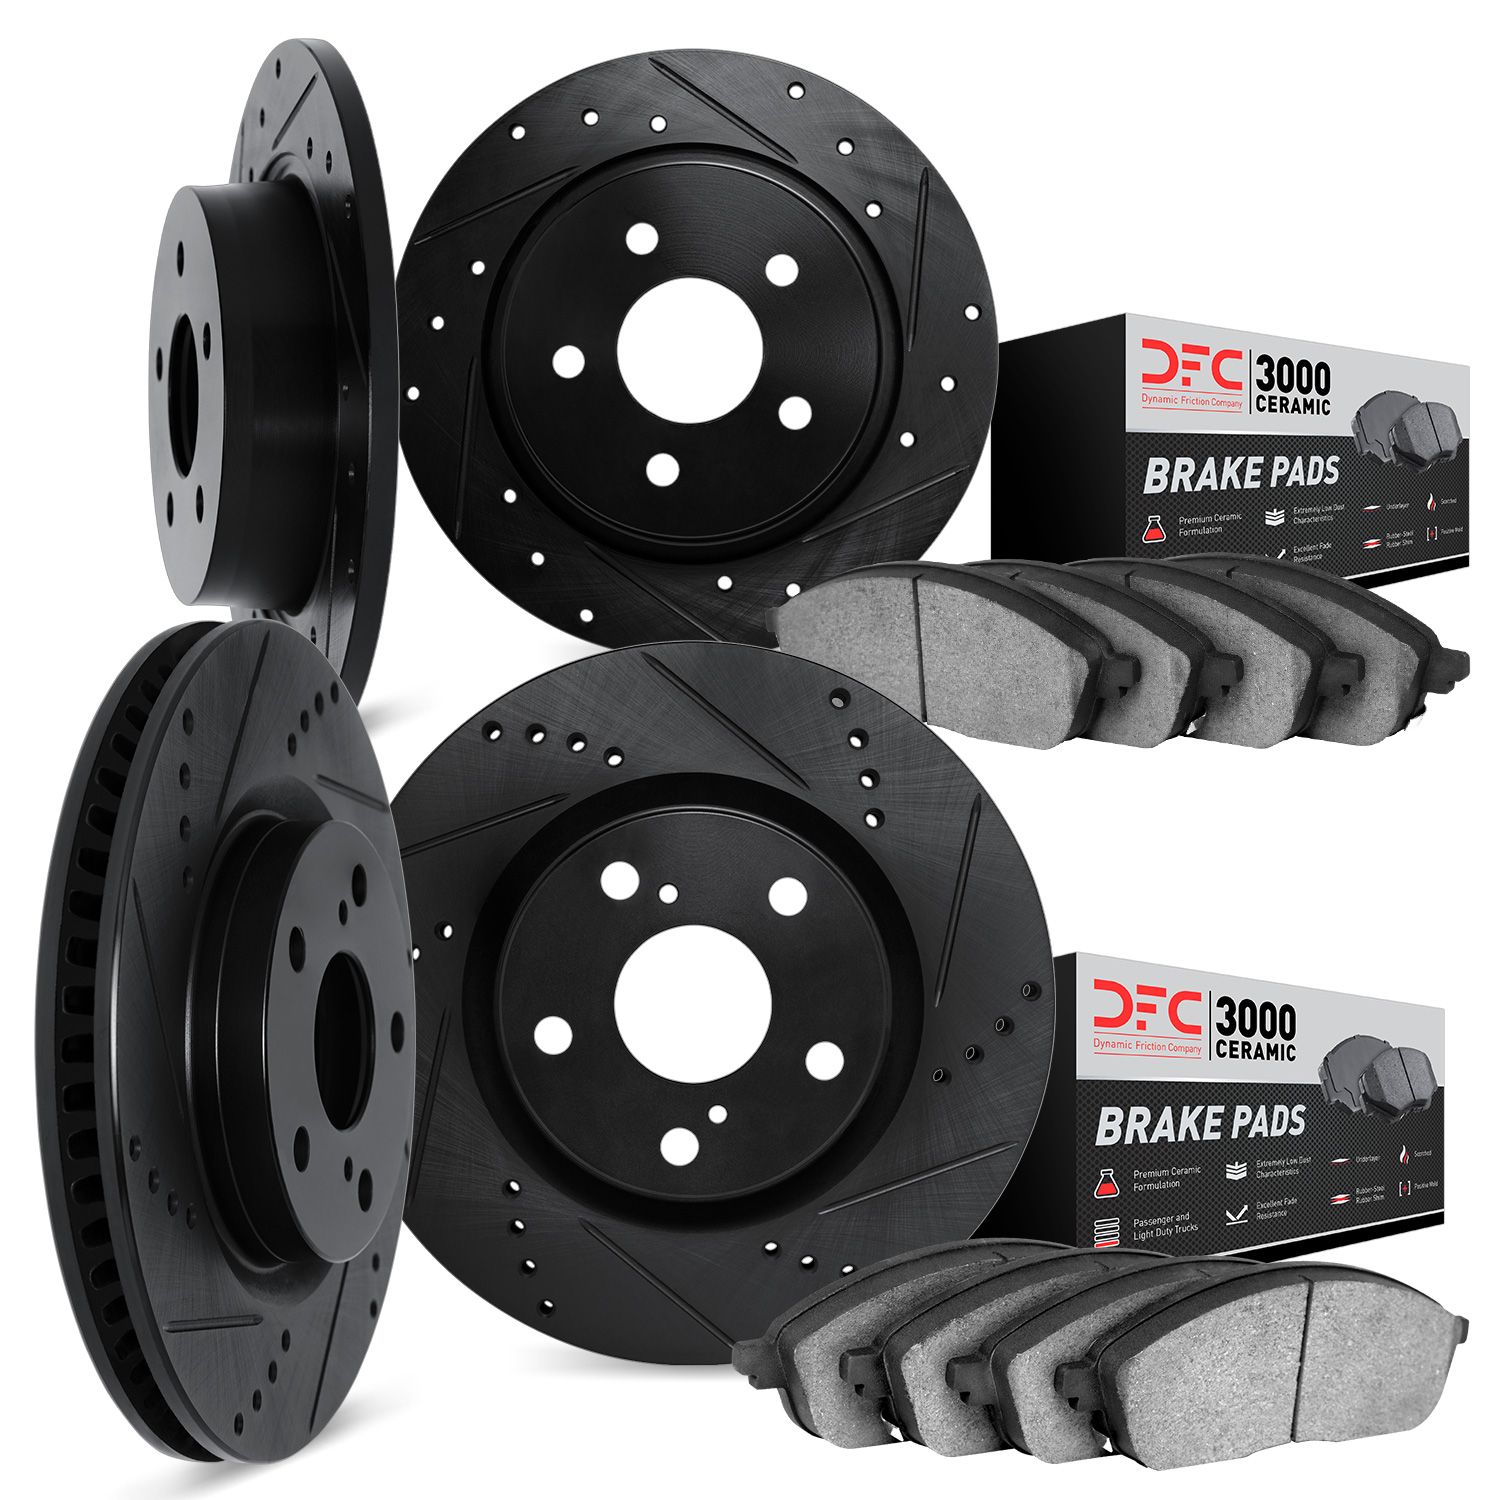 8304-76062 Drilled/Slotted Brake Rotors with 3000-Series Ceramic Brake Pads Kit [Black], 2003-2008 Multiple Makes/Models, Positi